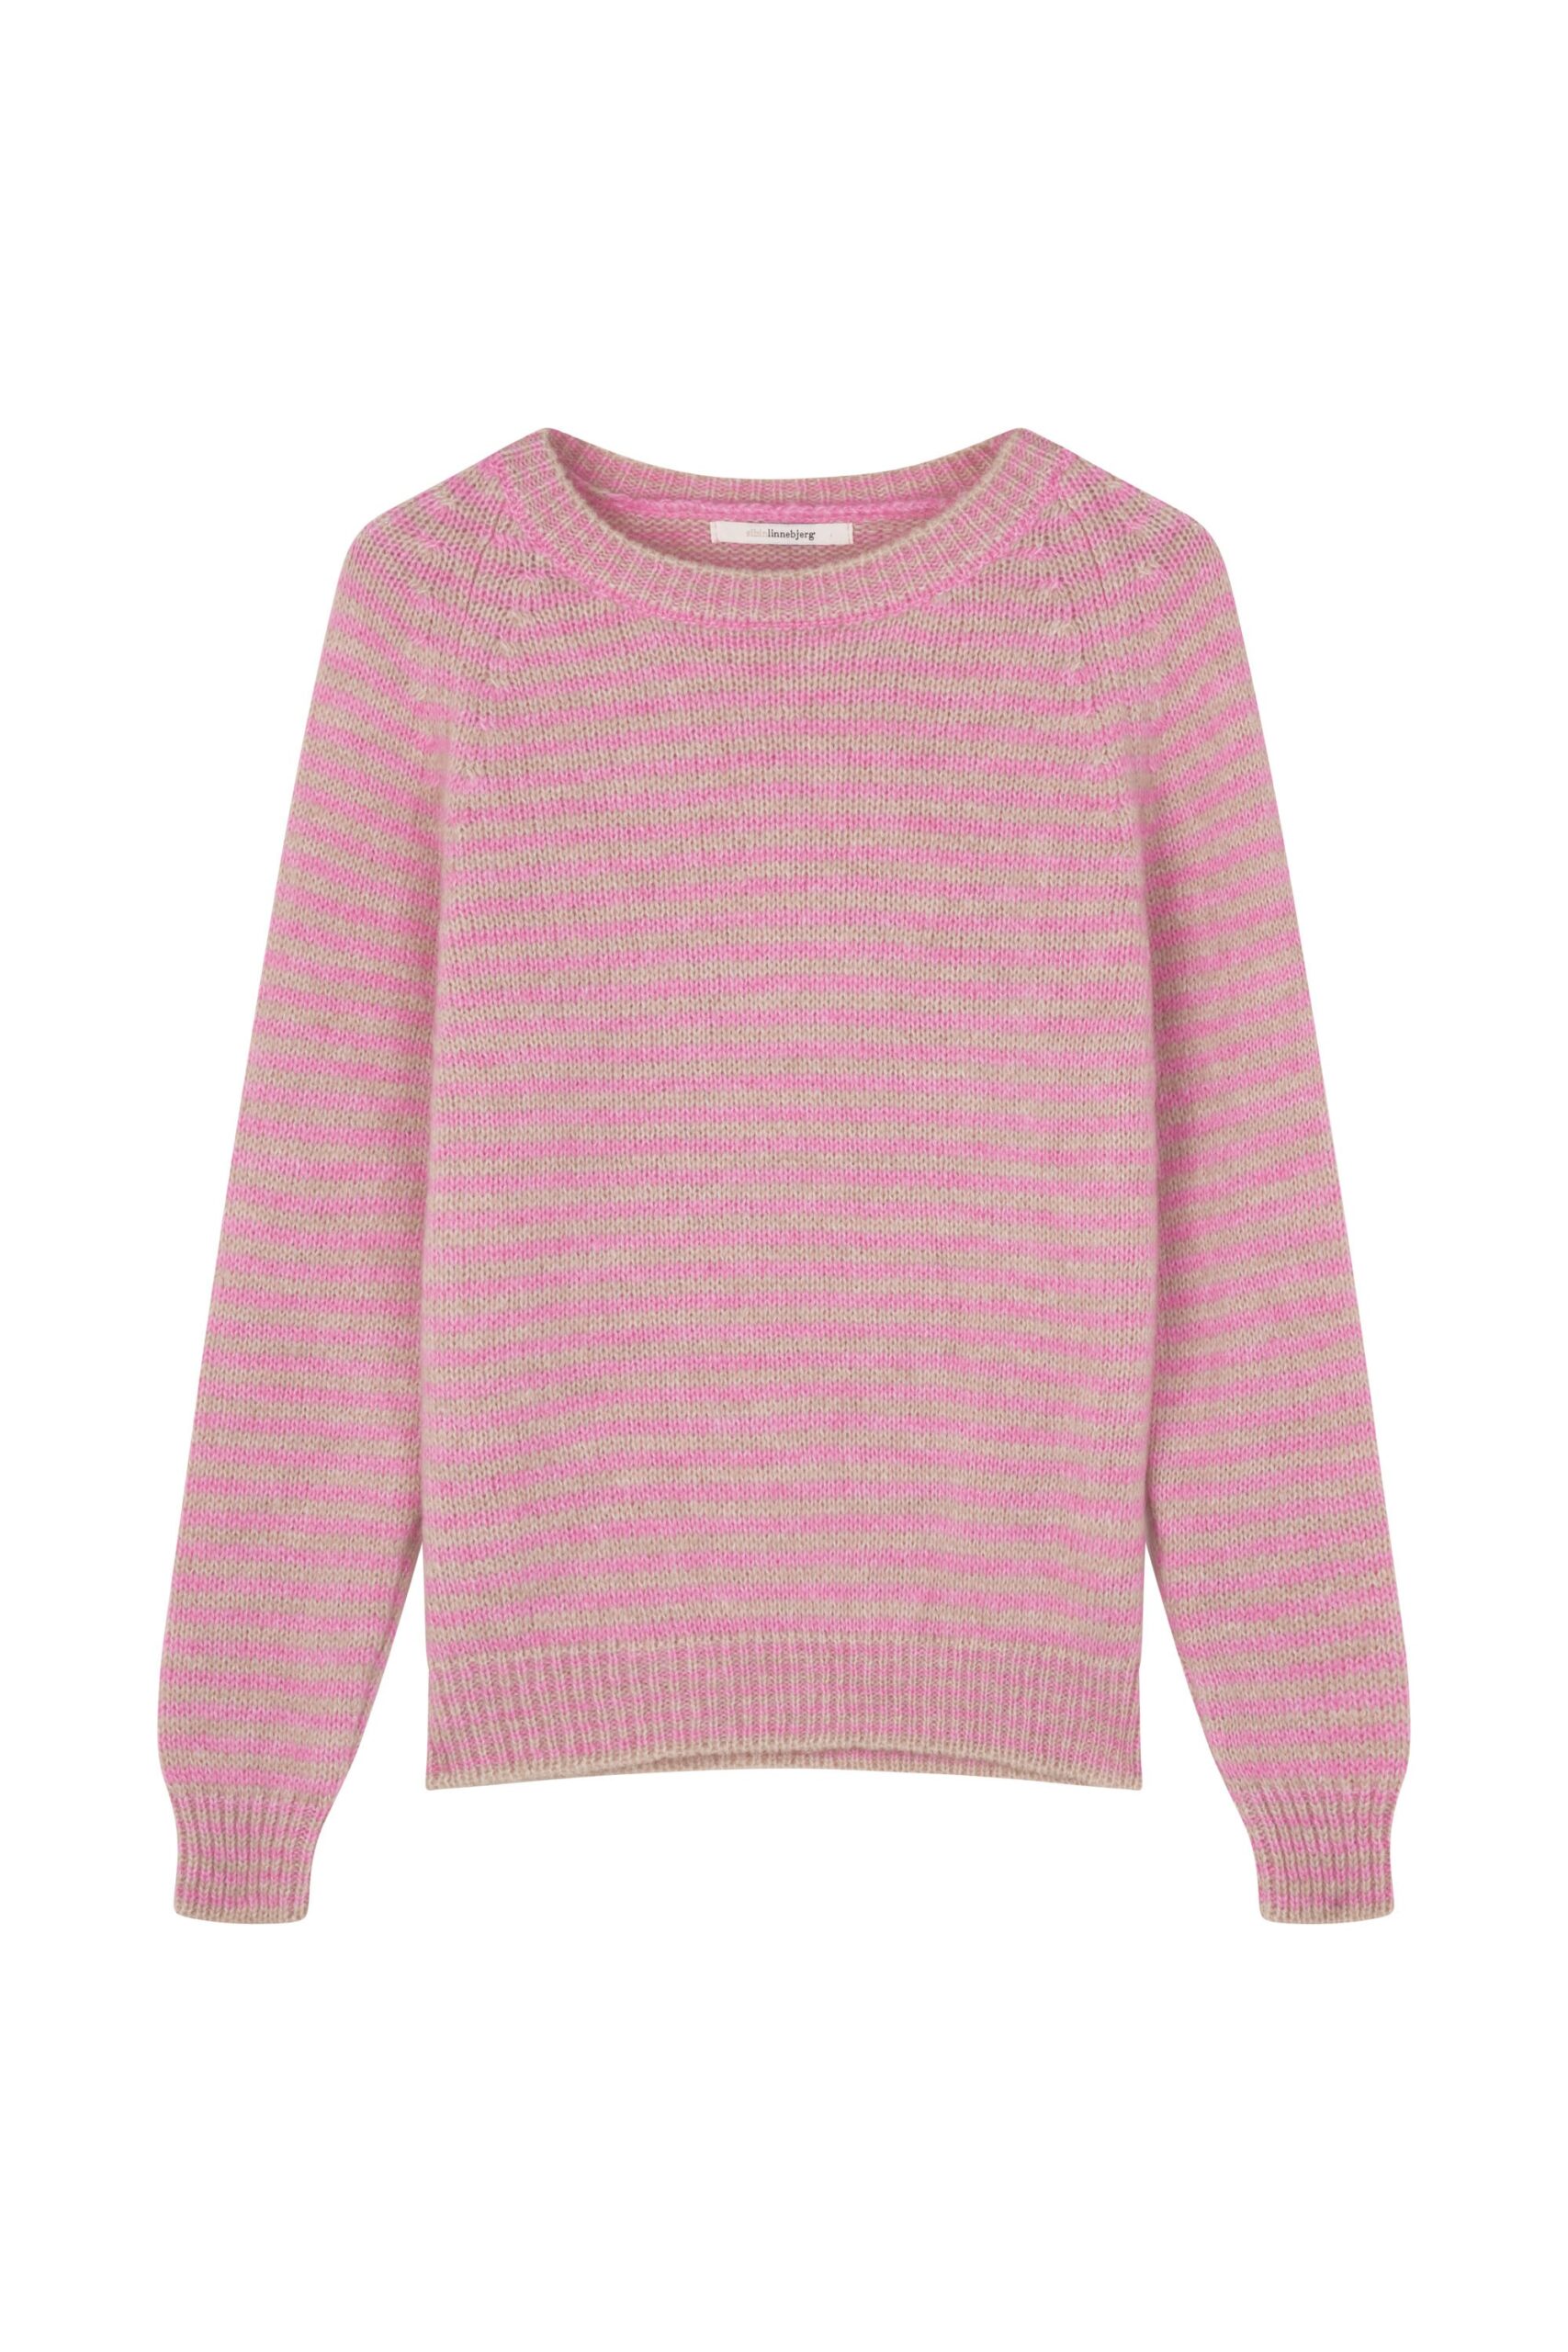 Sibinlinnebjerg - Sweater - Flamingo/Sand